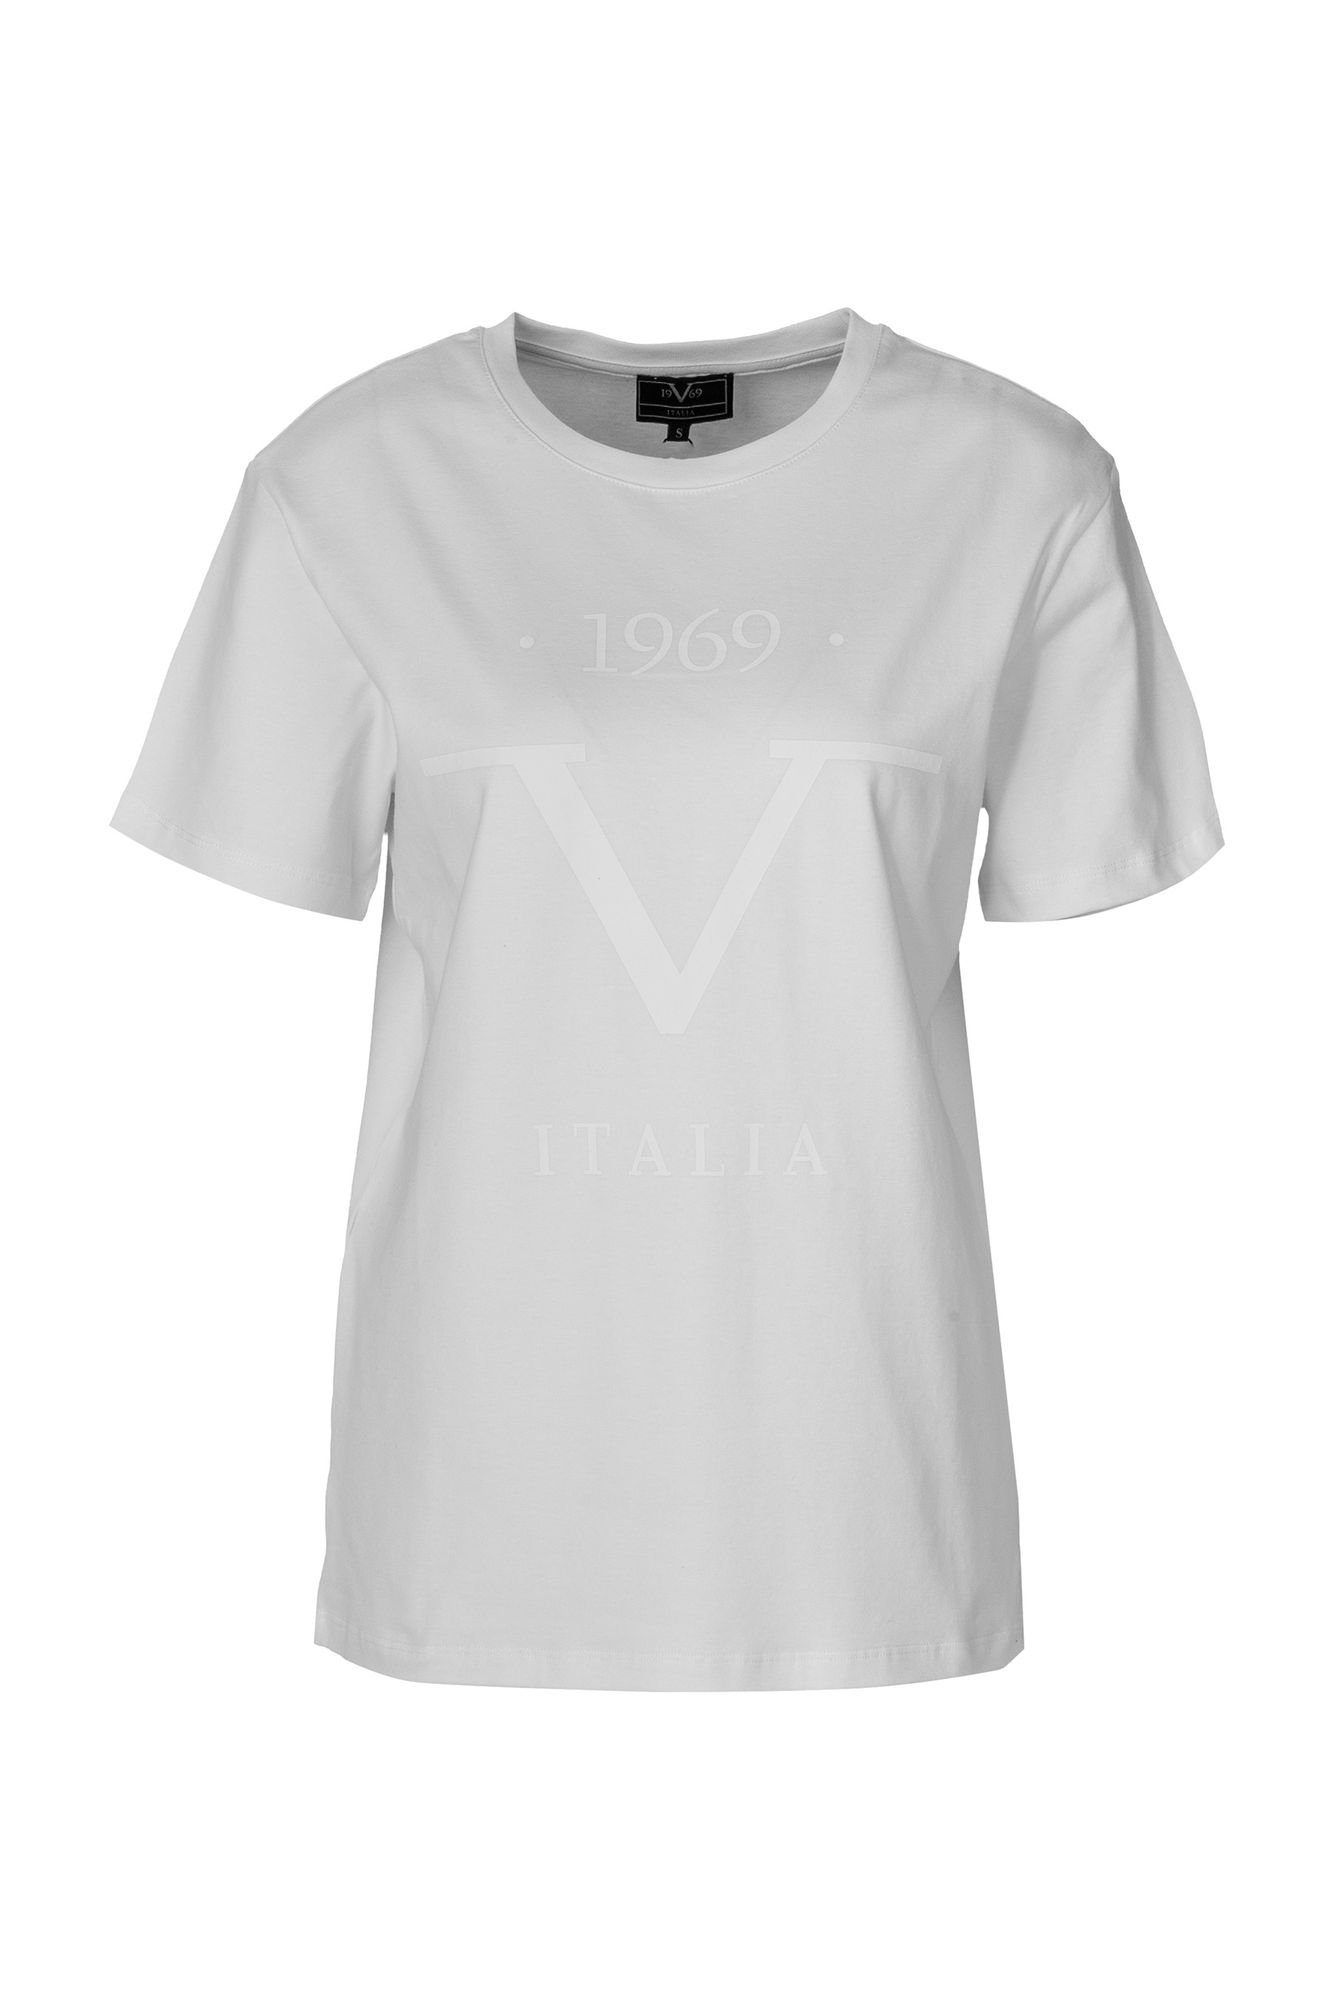 Diego-033 T-Shirt Versace Italia Print 19V69 mit by